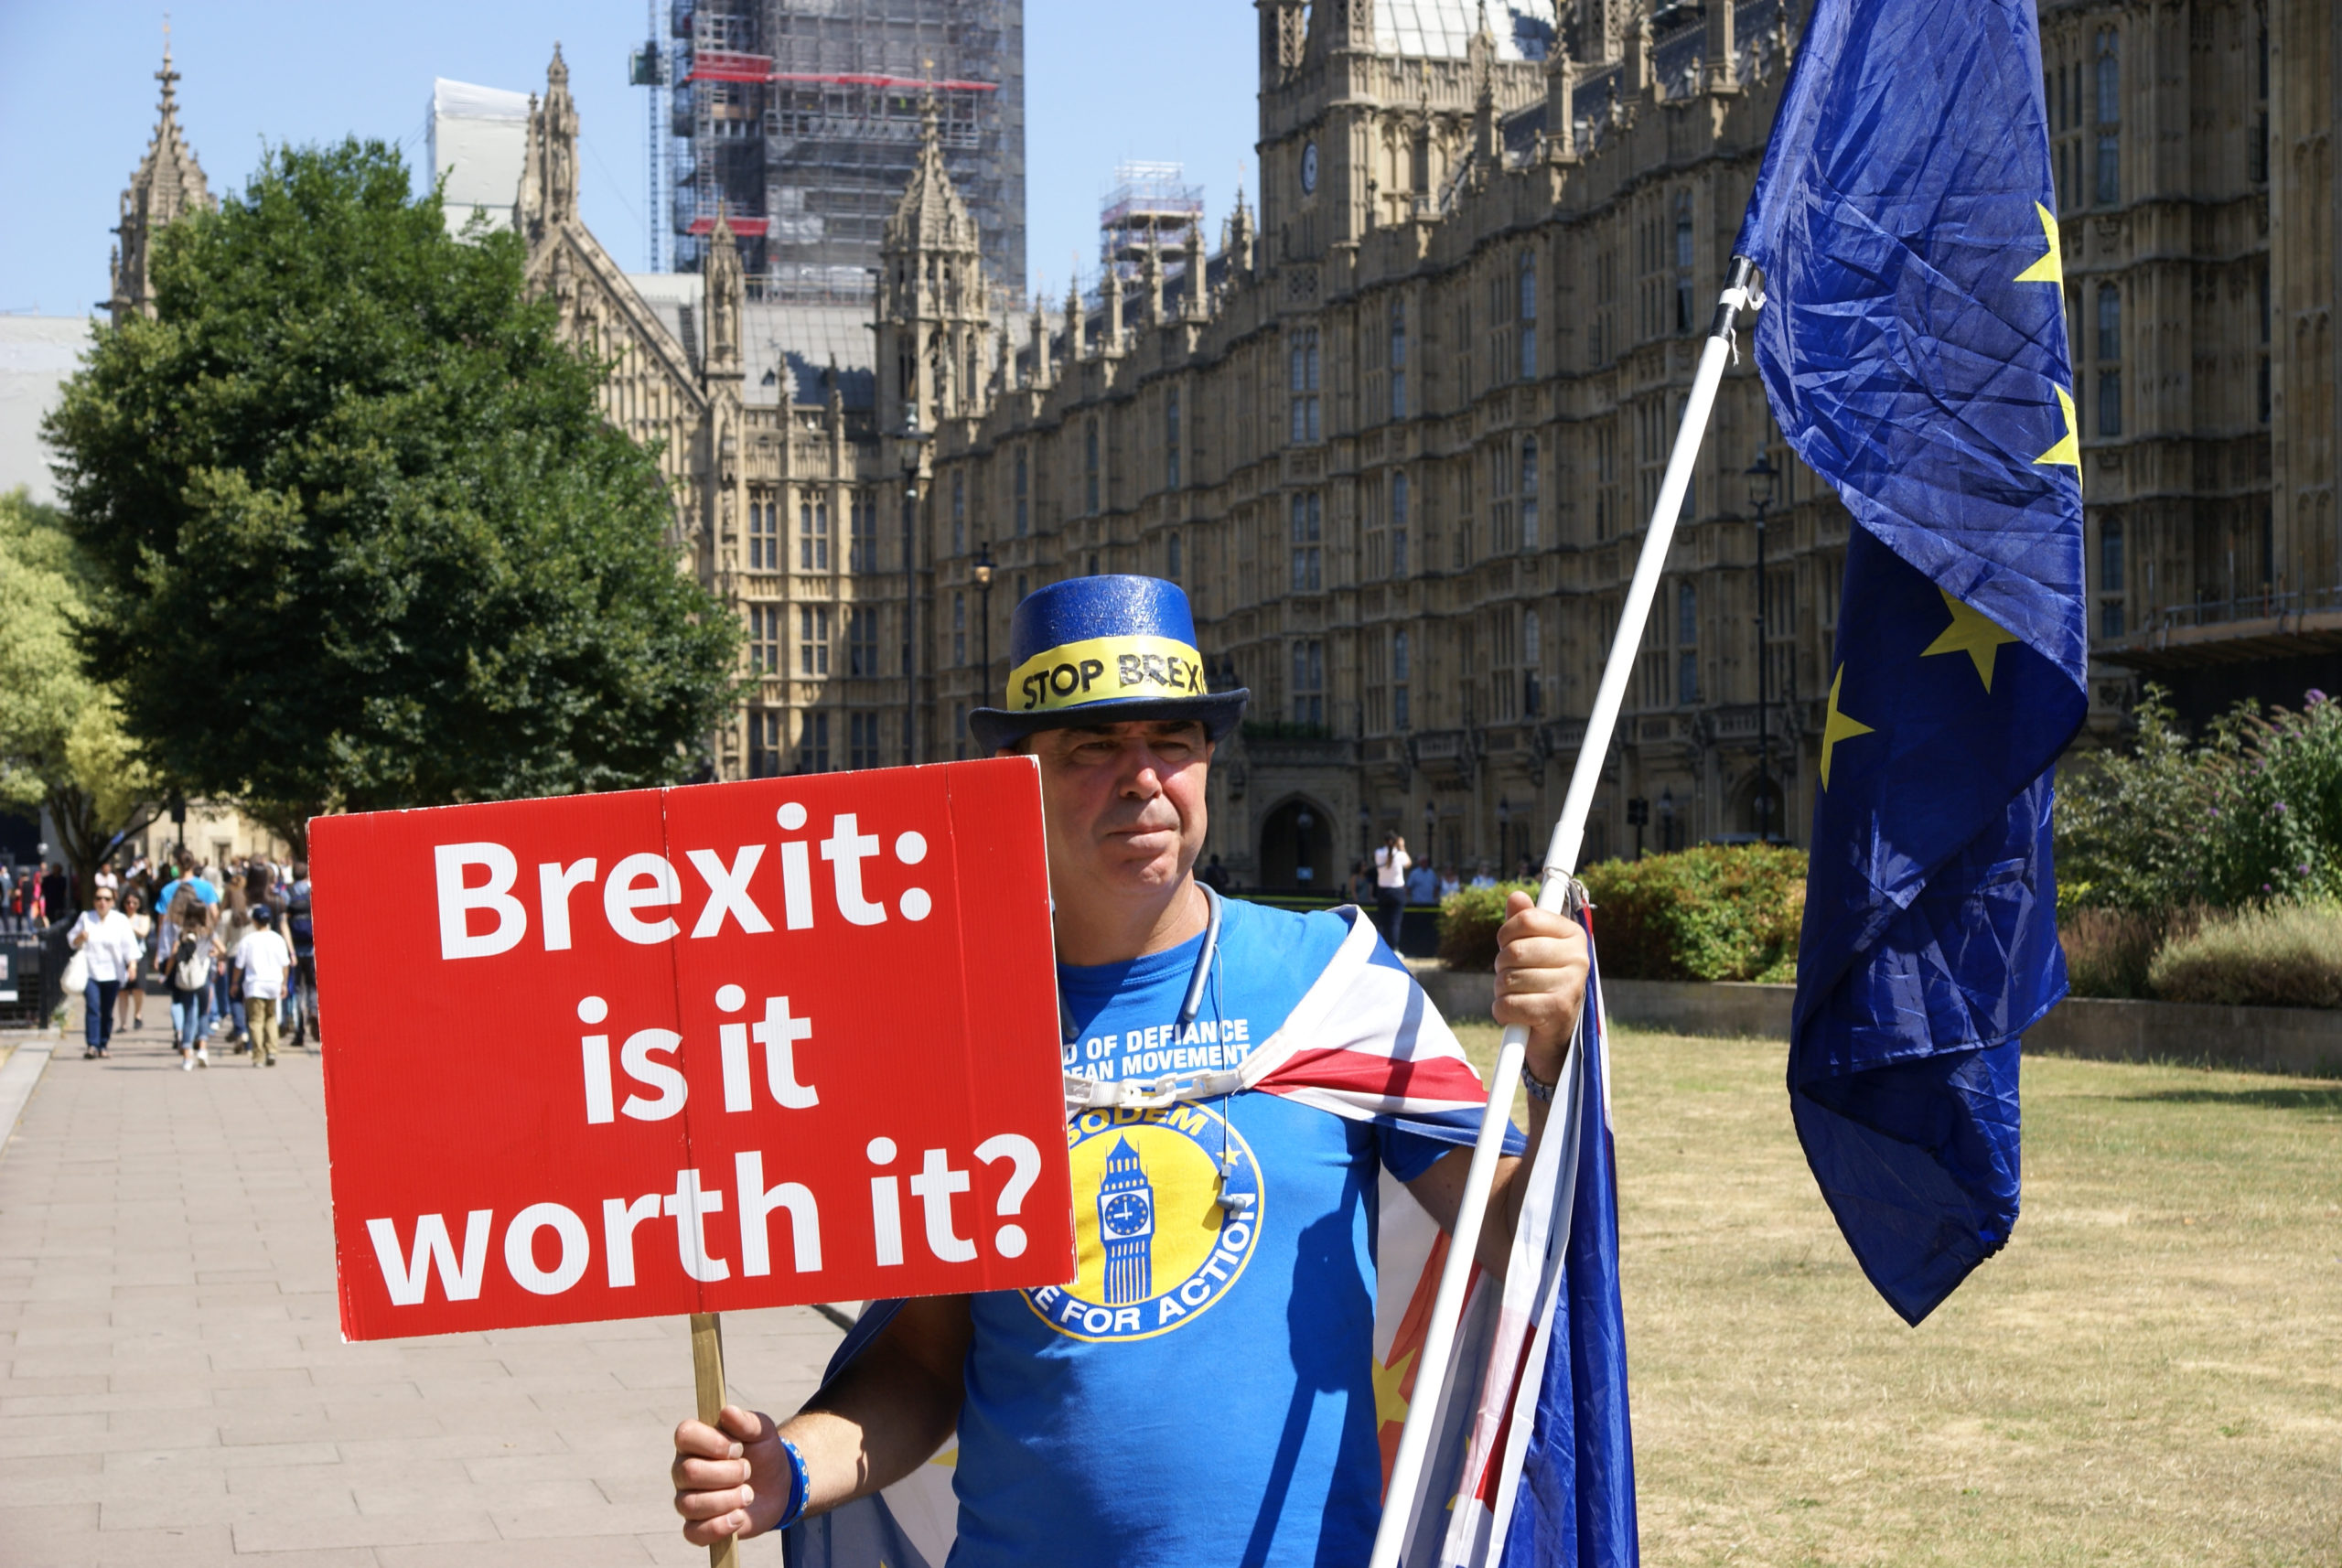 Mann kledd i blått med EU flagg står foran det britiske parlamentet med en plakat hvor det står "Brexit: is it worth it?"